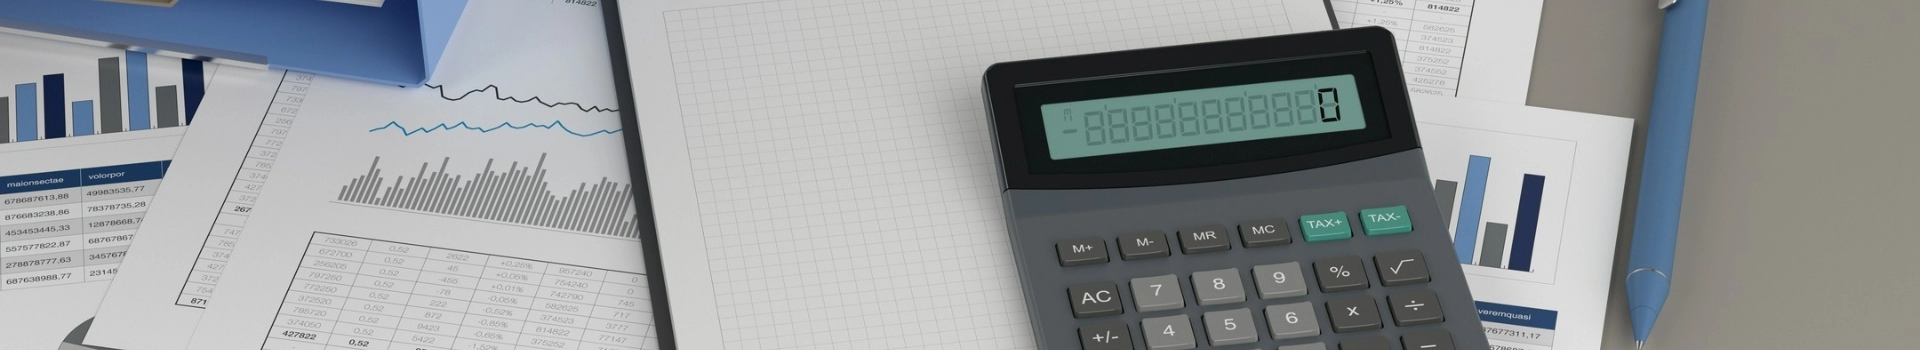 kalkulator na dokumentach